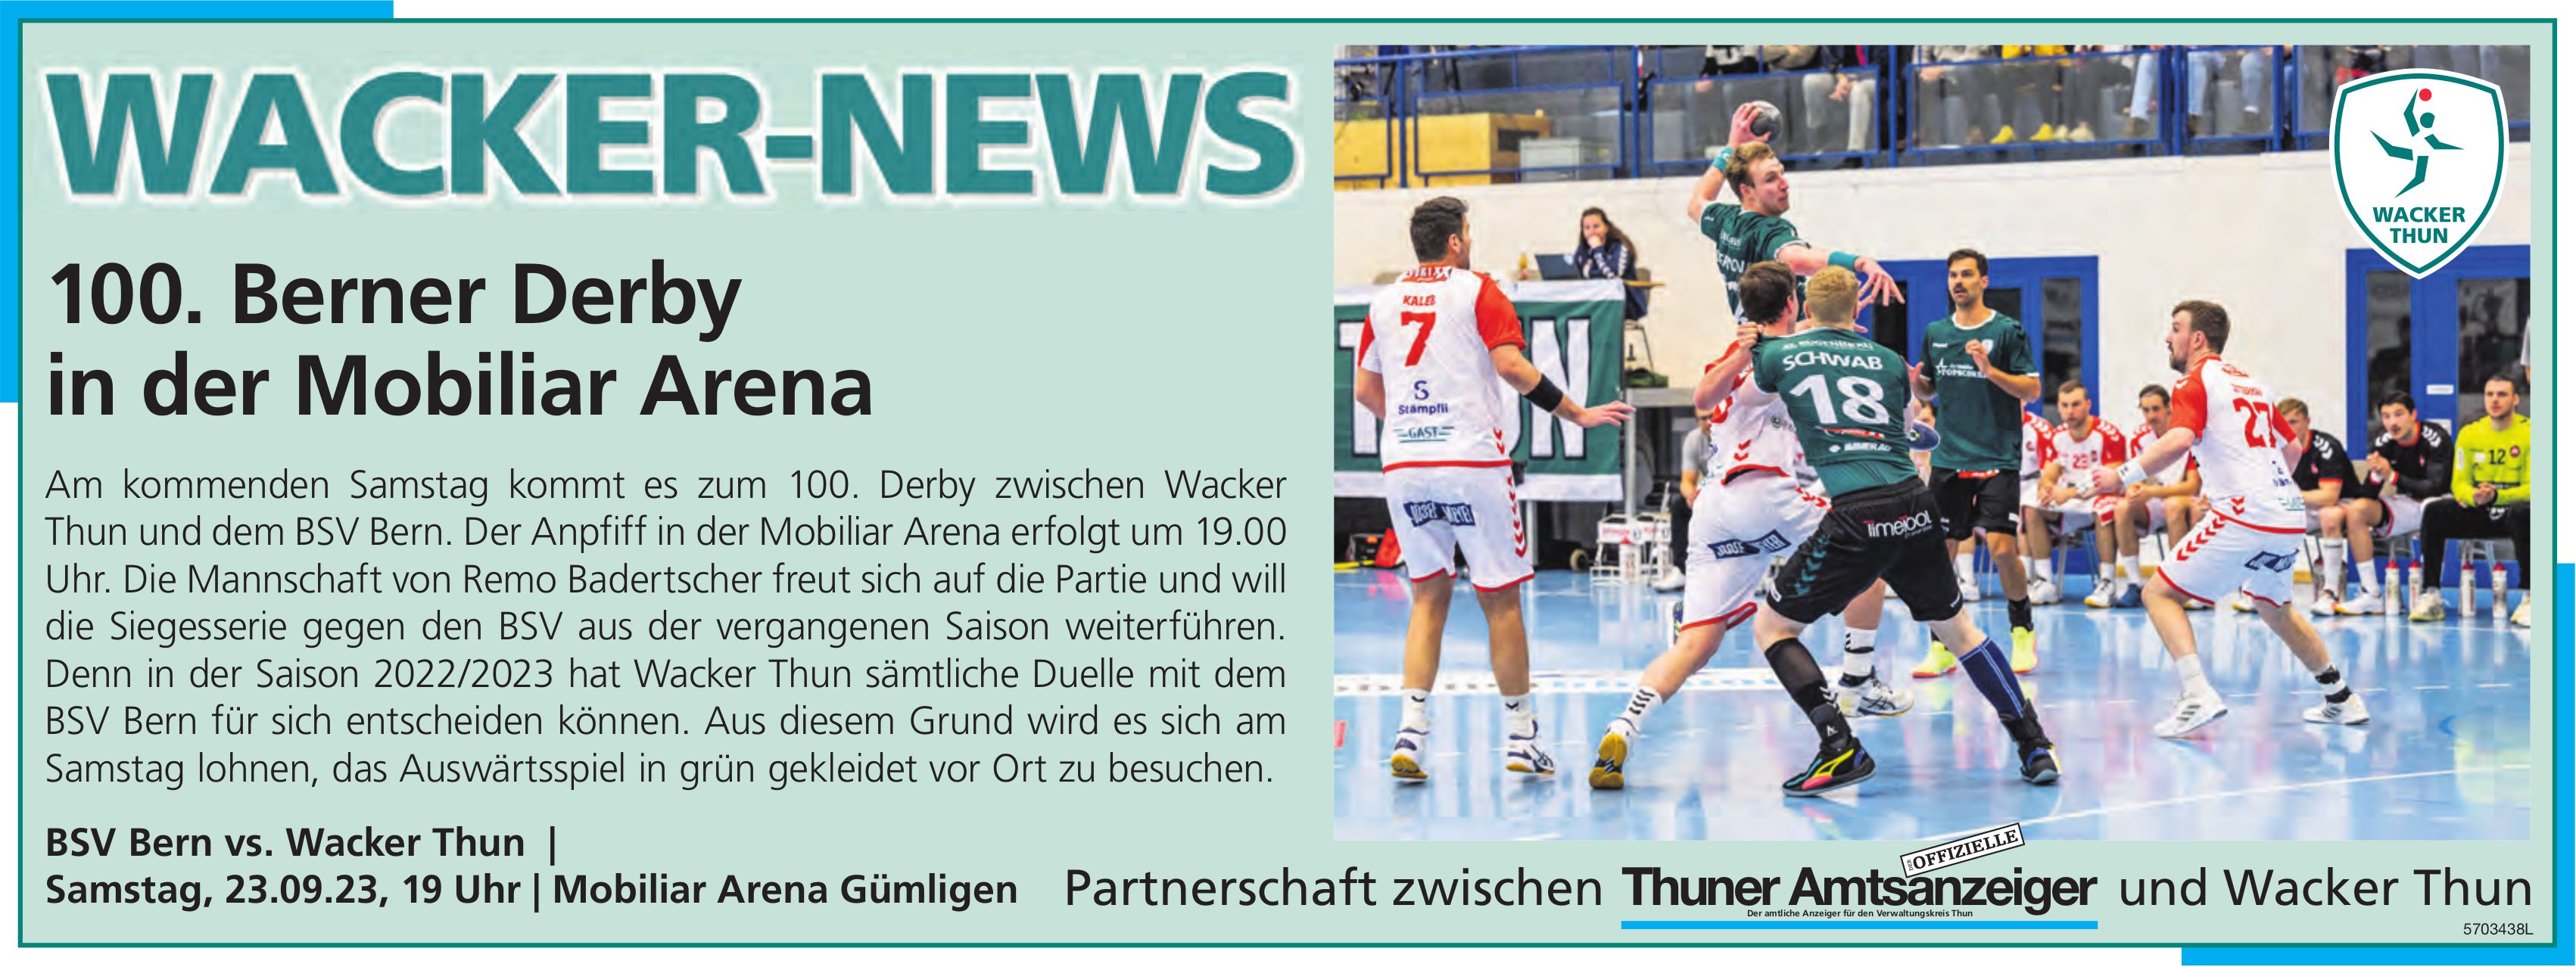 Thuner Amtsanzeiger / Wacker Thun - Wacker-News: 100. Berner Derby in der Mobiliar Arena